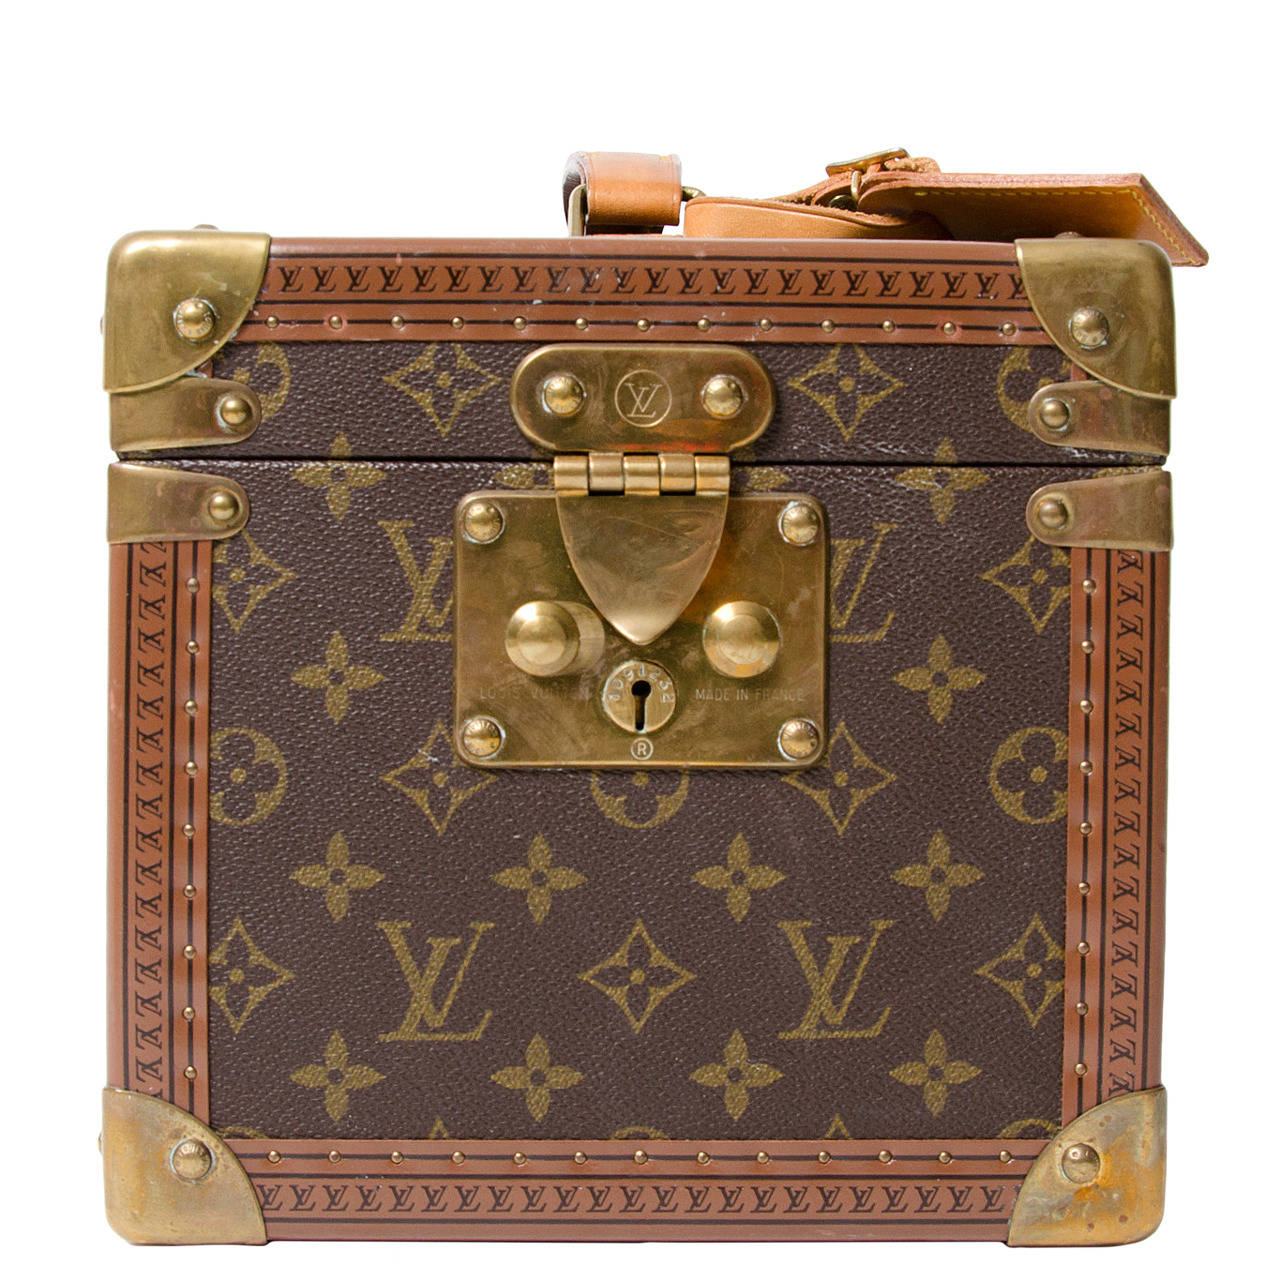 Louis Vuitton Case фото в формате jpeg, распечатайте фото или смотрите ...